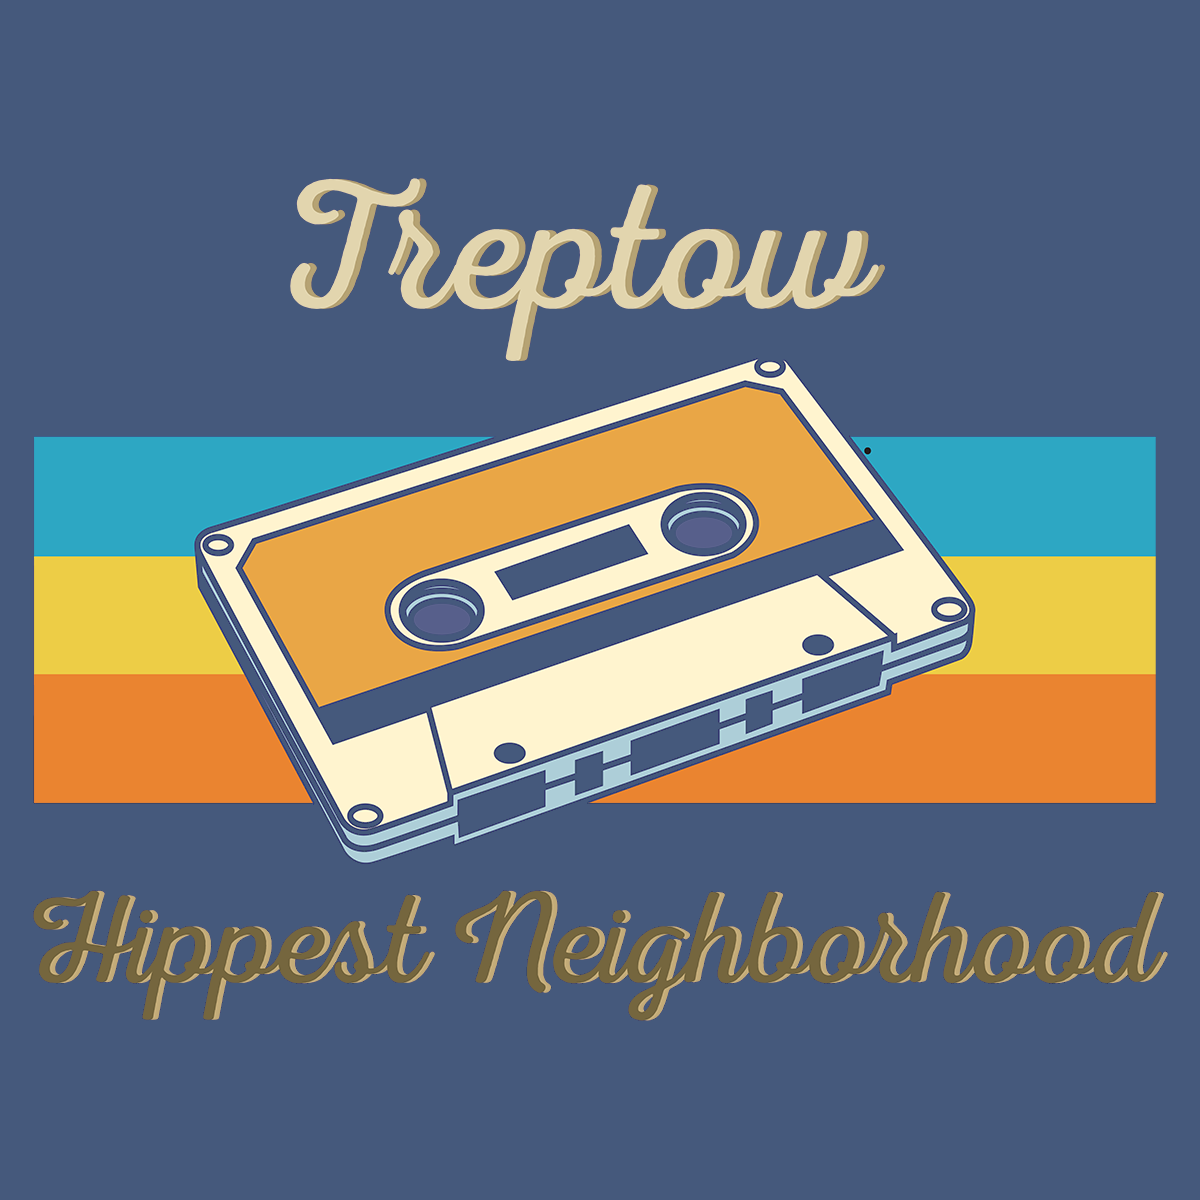 Treptow Hippest Neighborhood